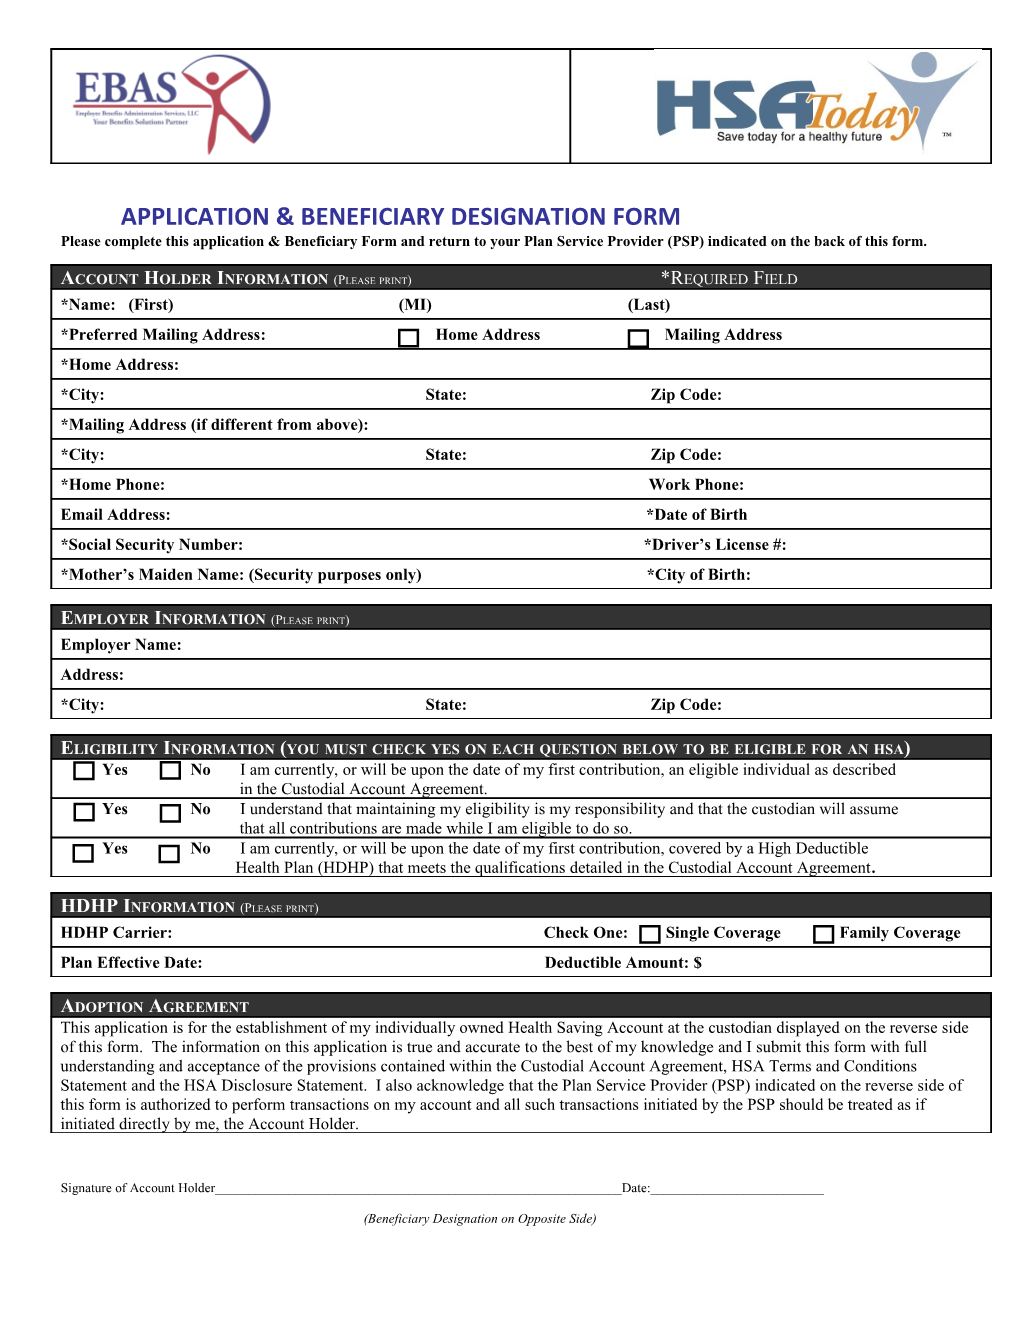 Application & Beneficiary Designation Form